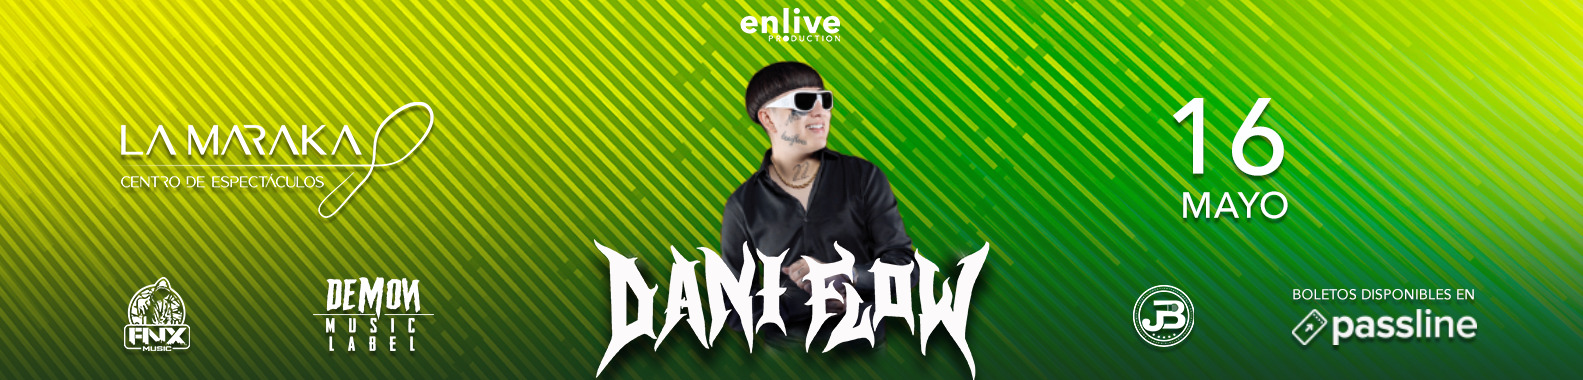 Dani flow